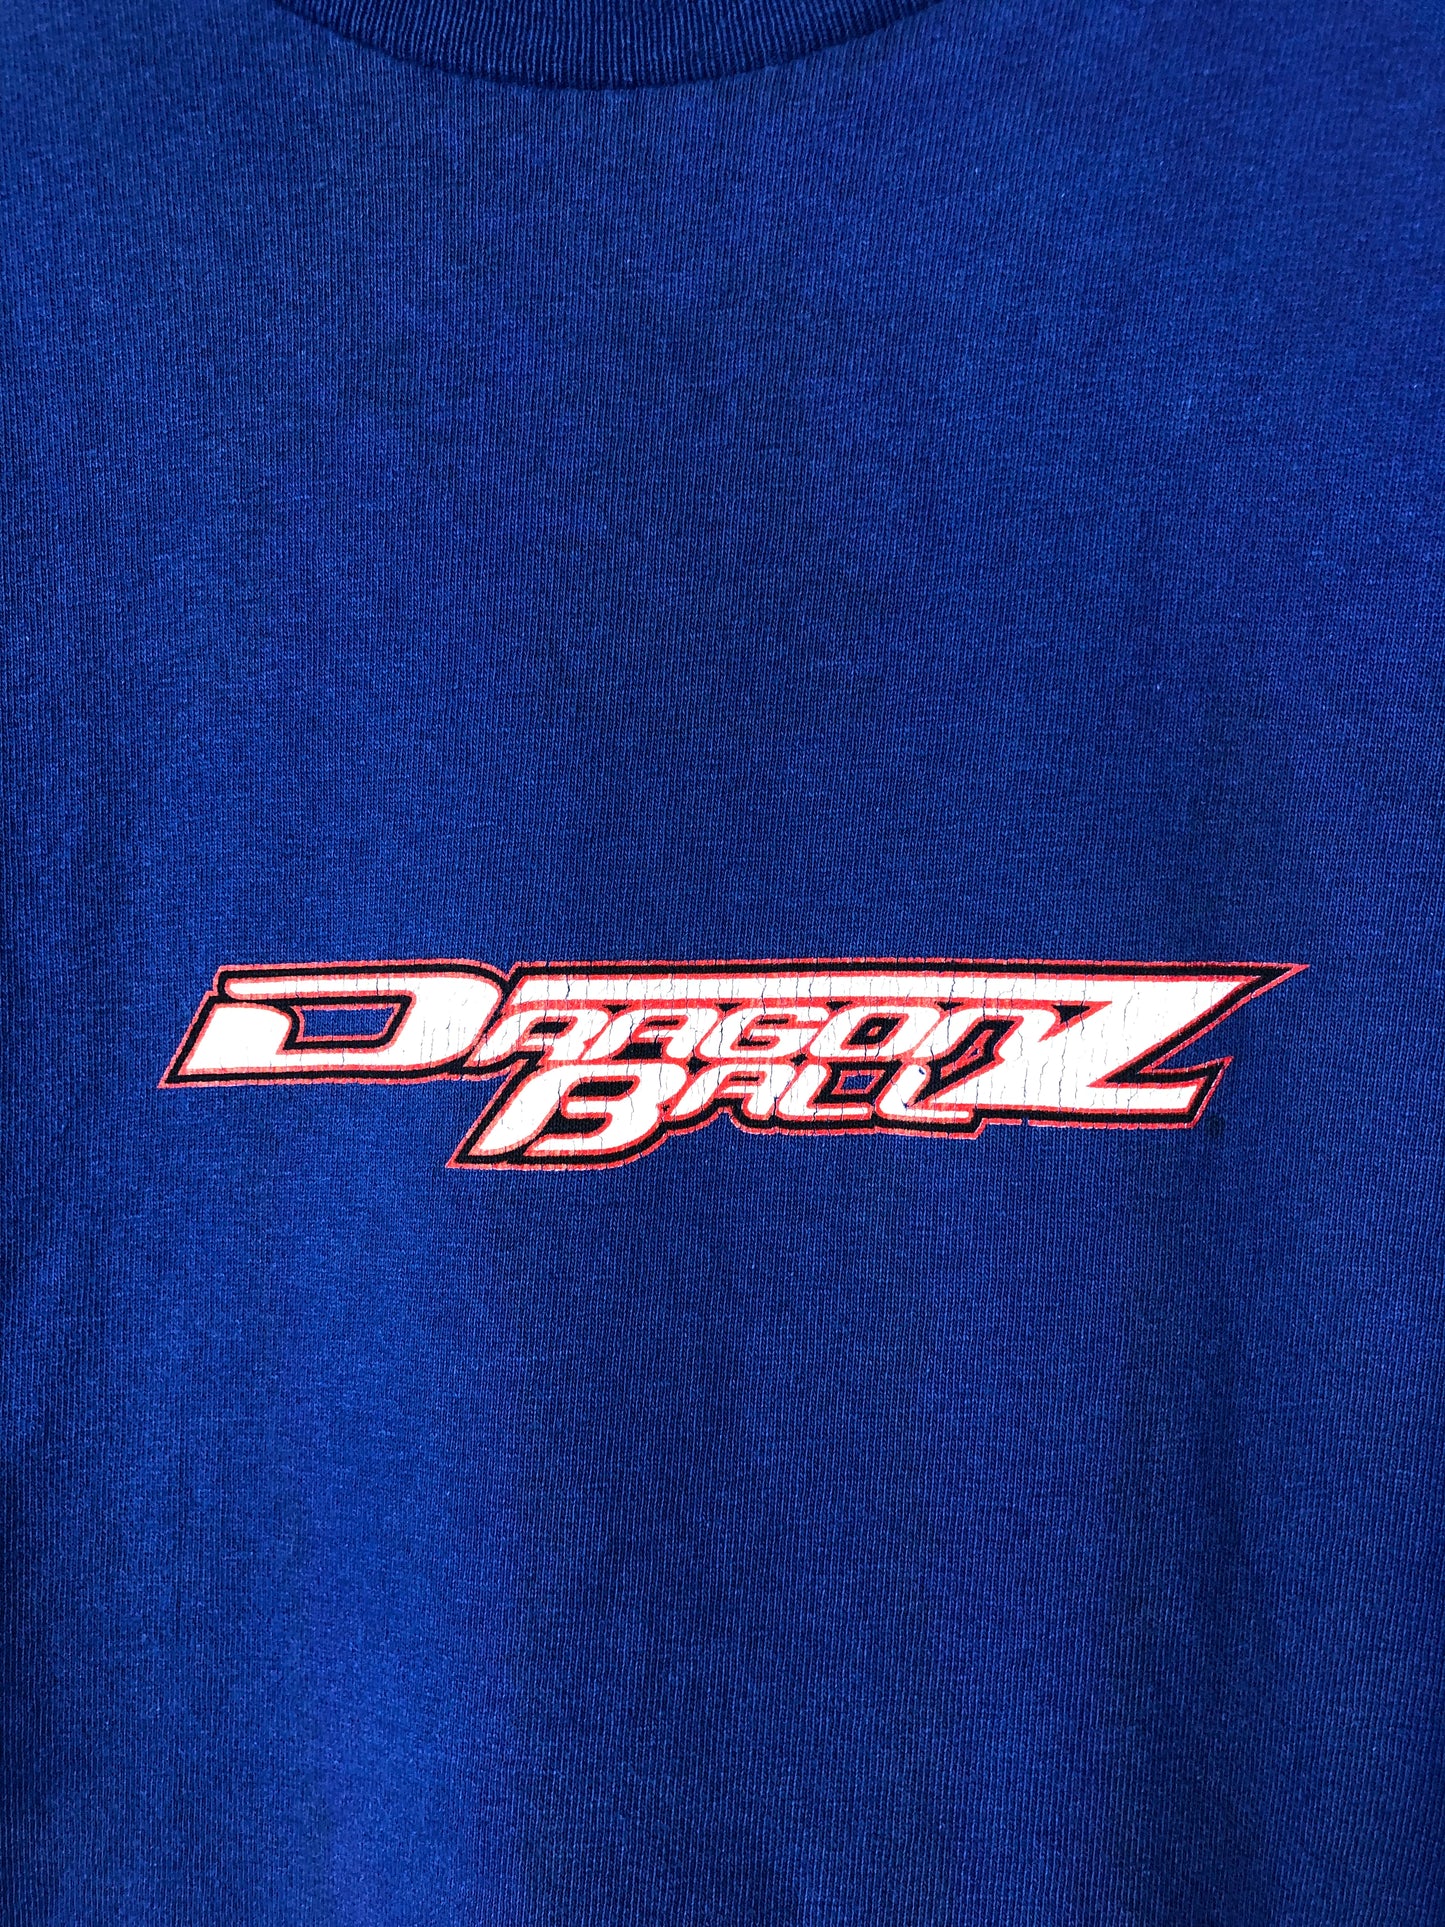 VTG Dragonball Z Goku/Bardock 2000 Tee Sz XL